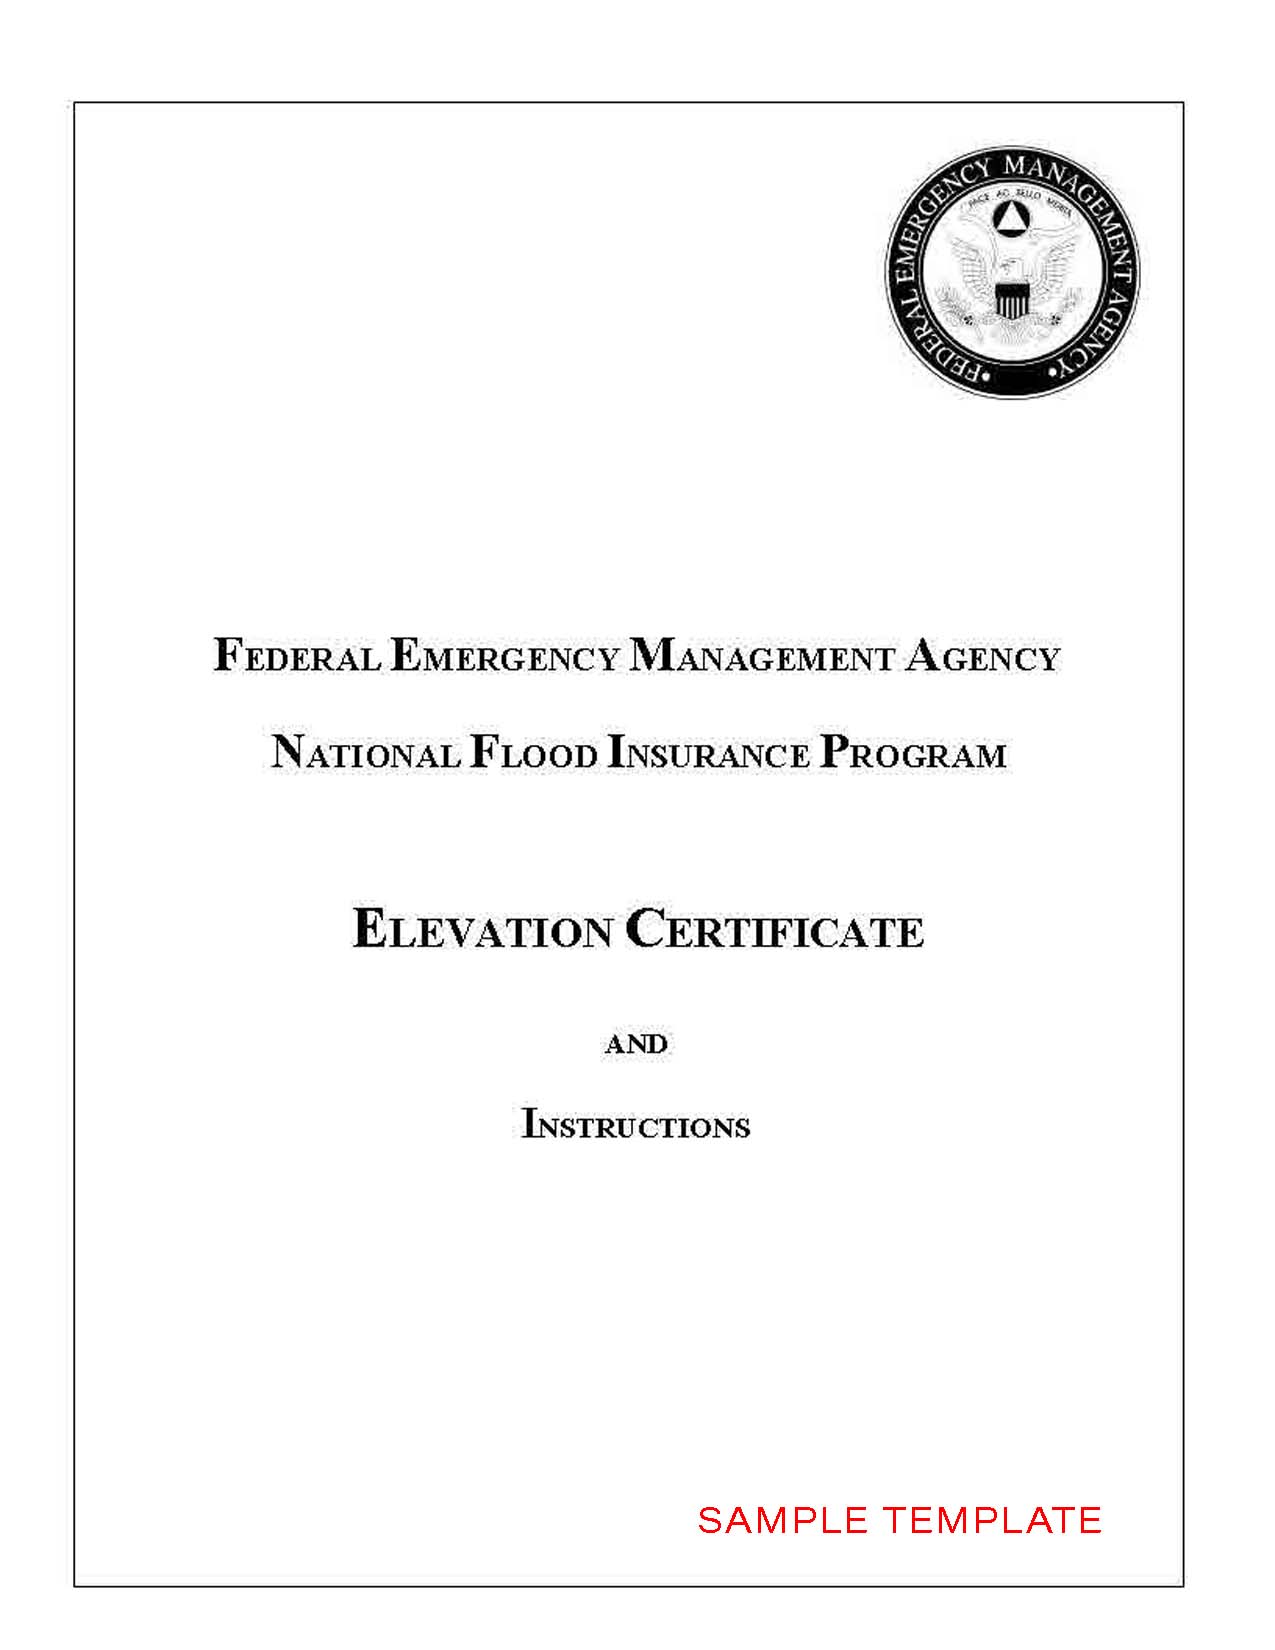 AmeriSurveyors Elevation Certificate Sample